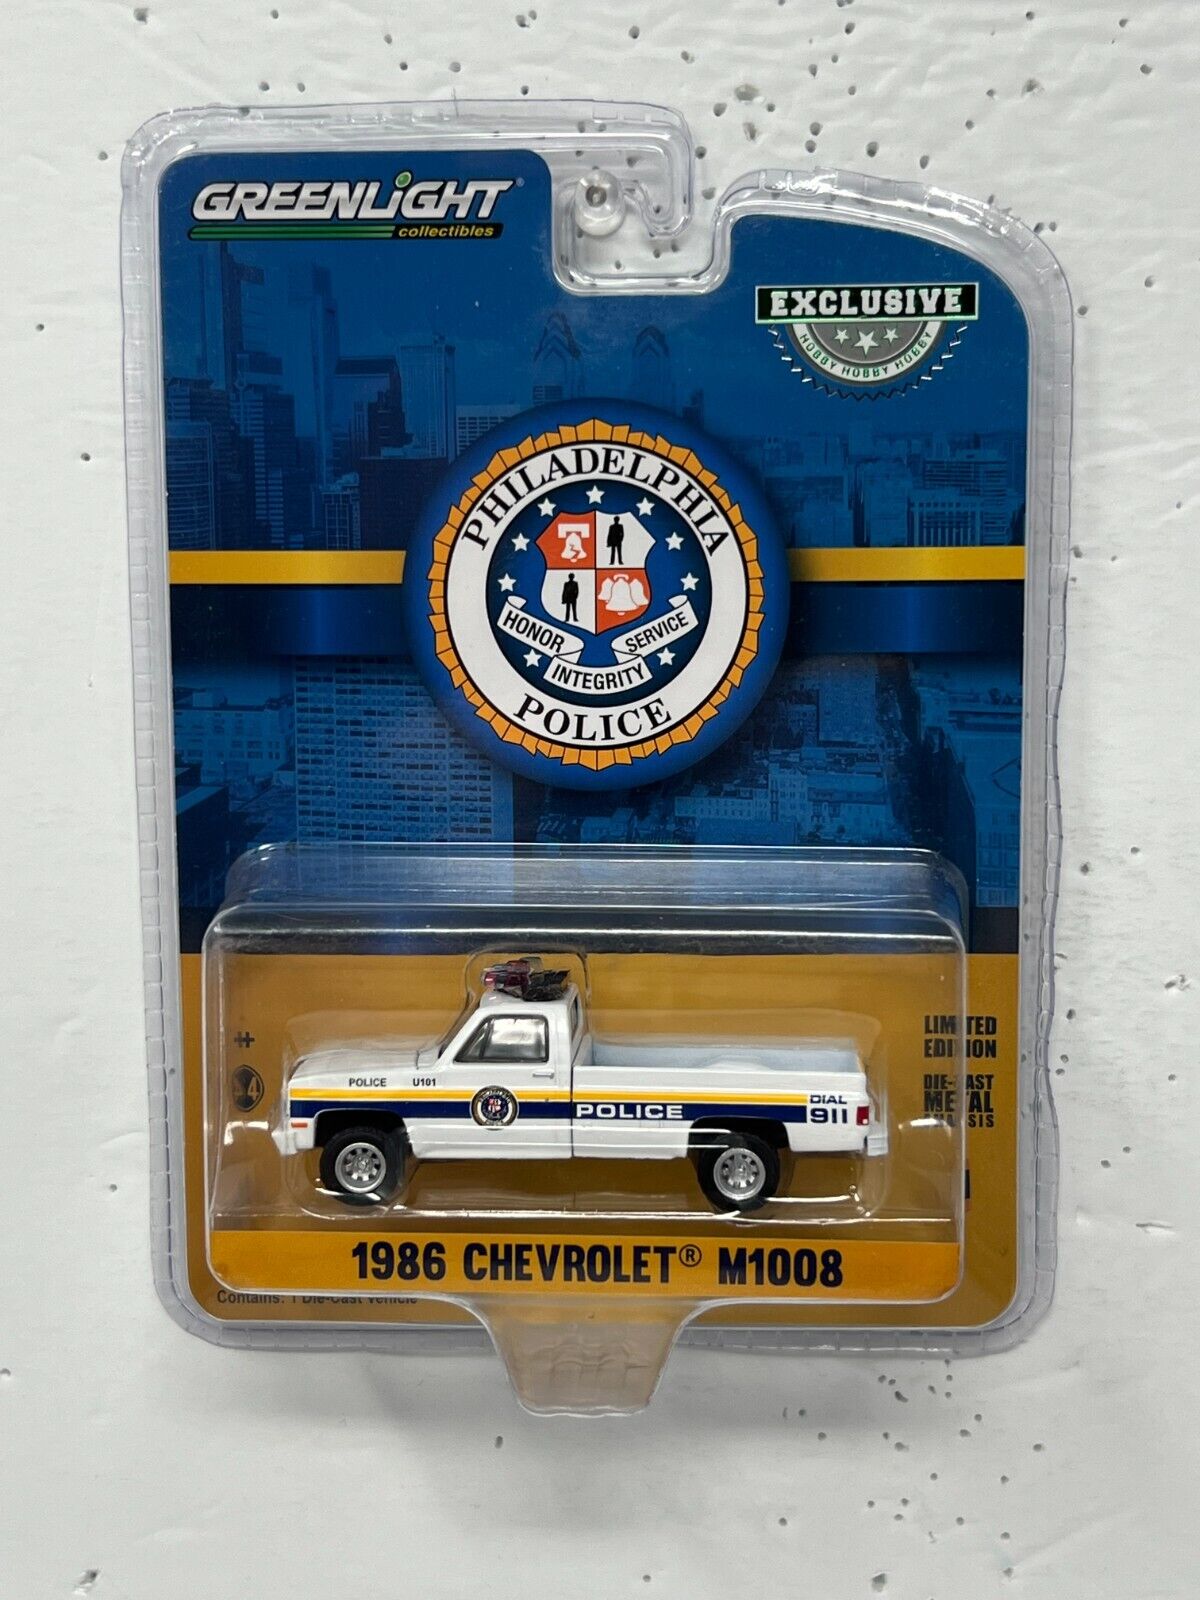 Greenlight Hobby Exclusive Philadelphia Police 1986 Chevrolet M1008 1:64 Diecast